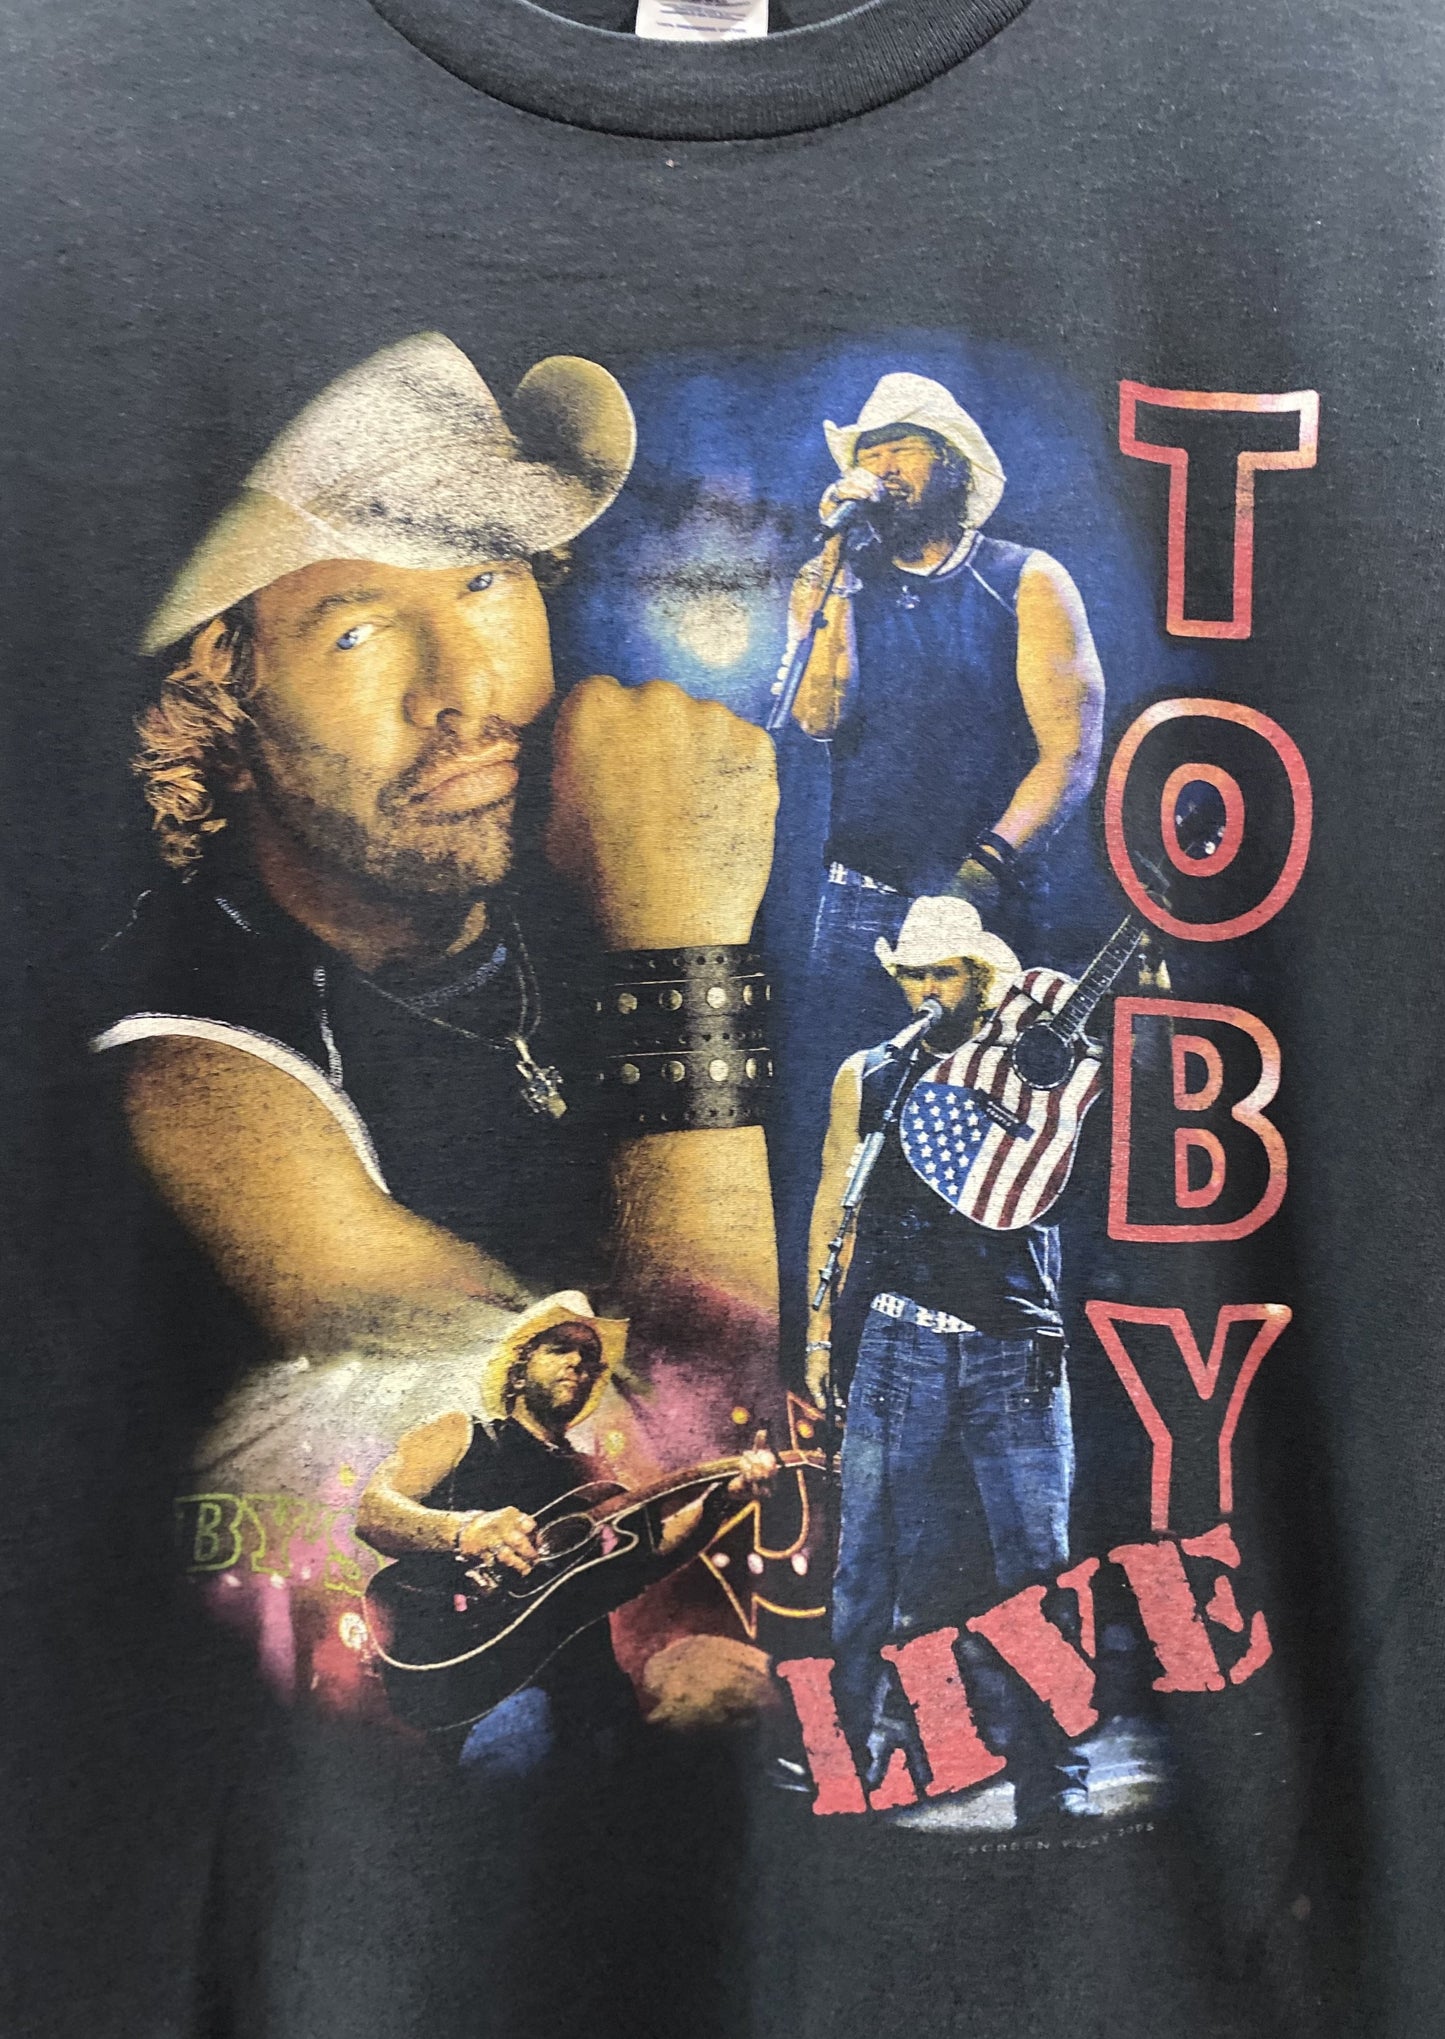 2005 Toby Keith Honky Tonk U Tour T-Shirt (4811531255888)